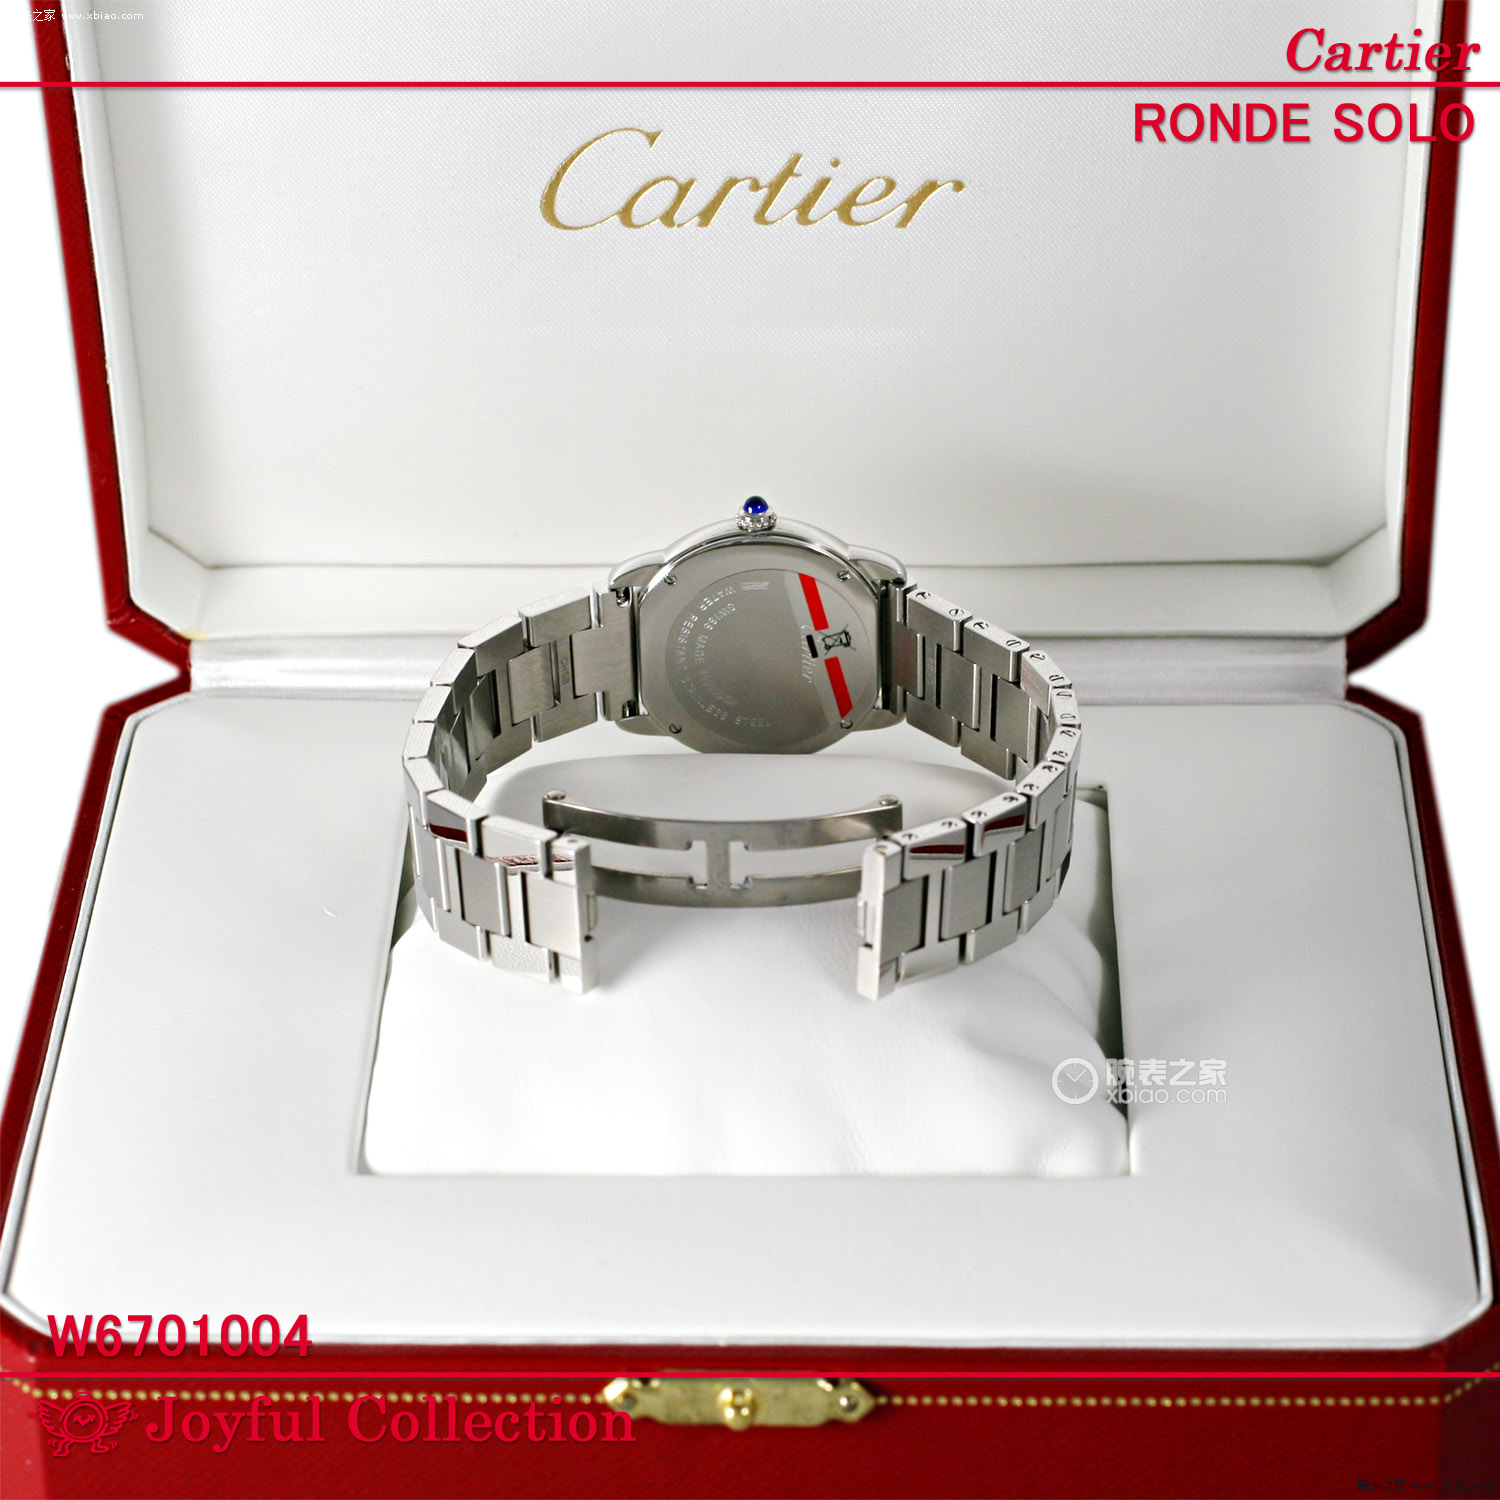 卡地亚RONDE DE CARTIER系列W6701004